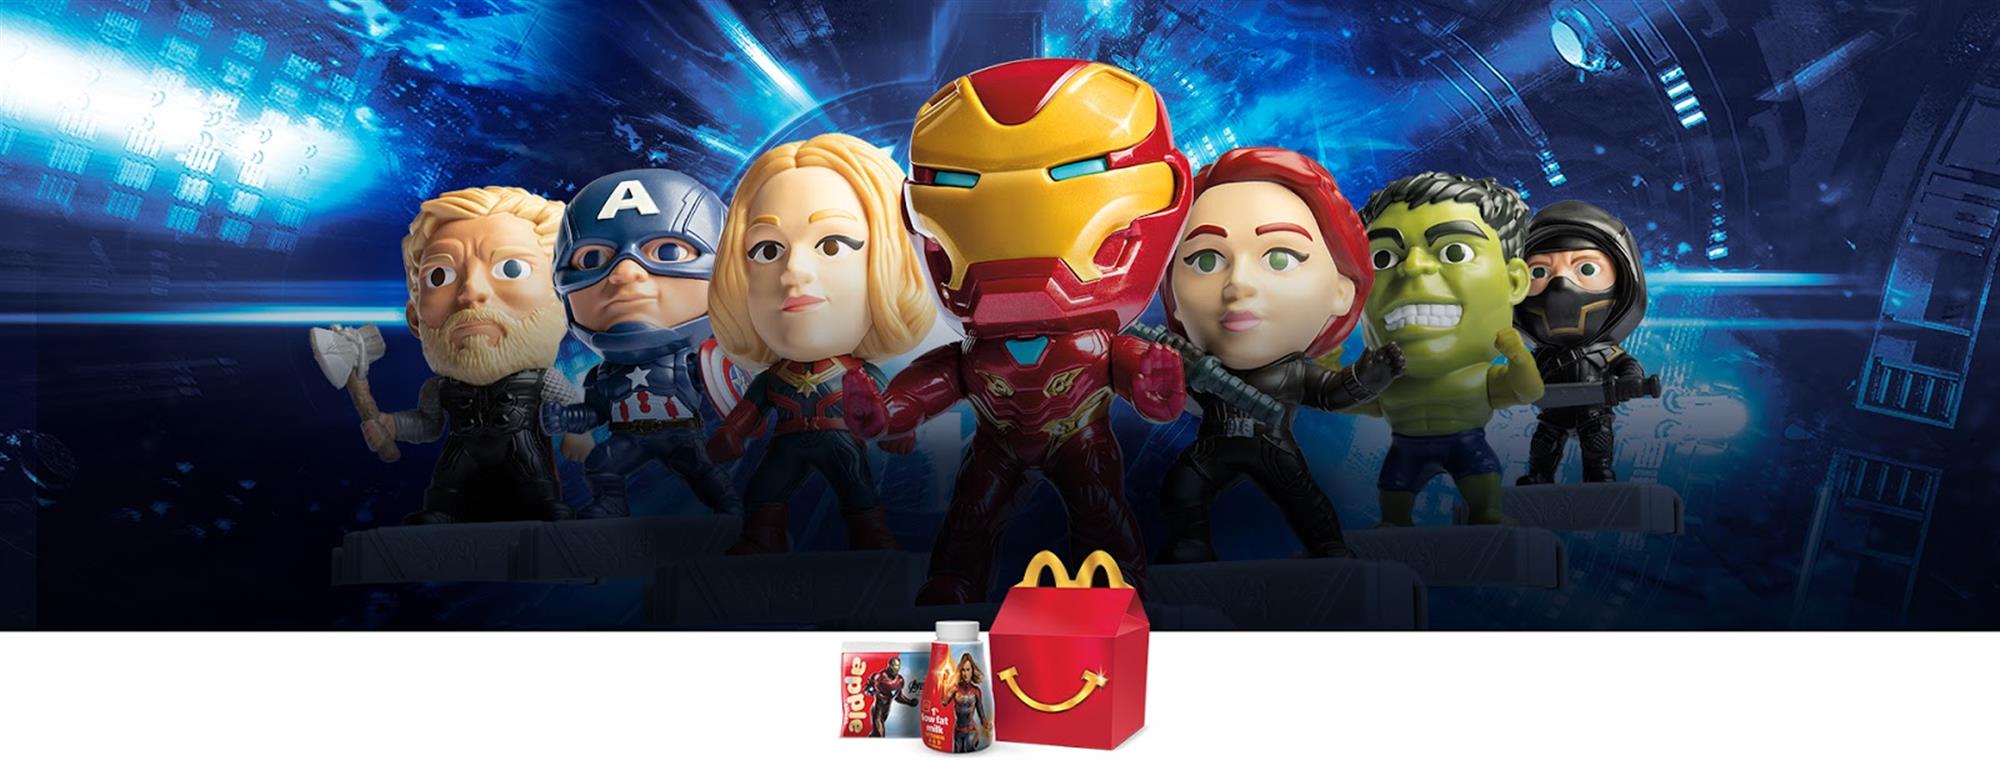 McDonald’s 2019 Marvel Avengers Endgame Happy Meal Toys New NIB You Pick 